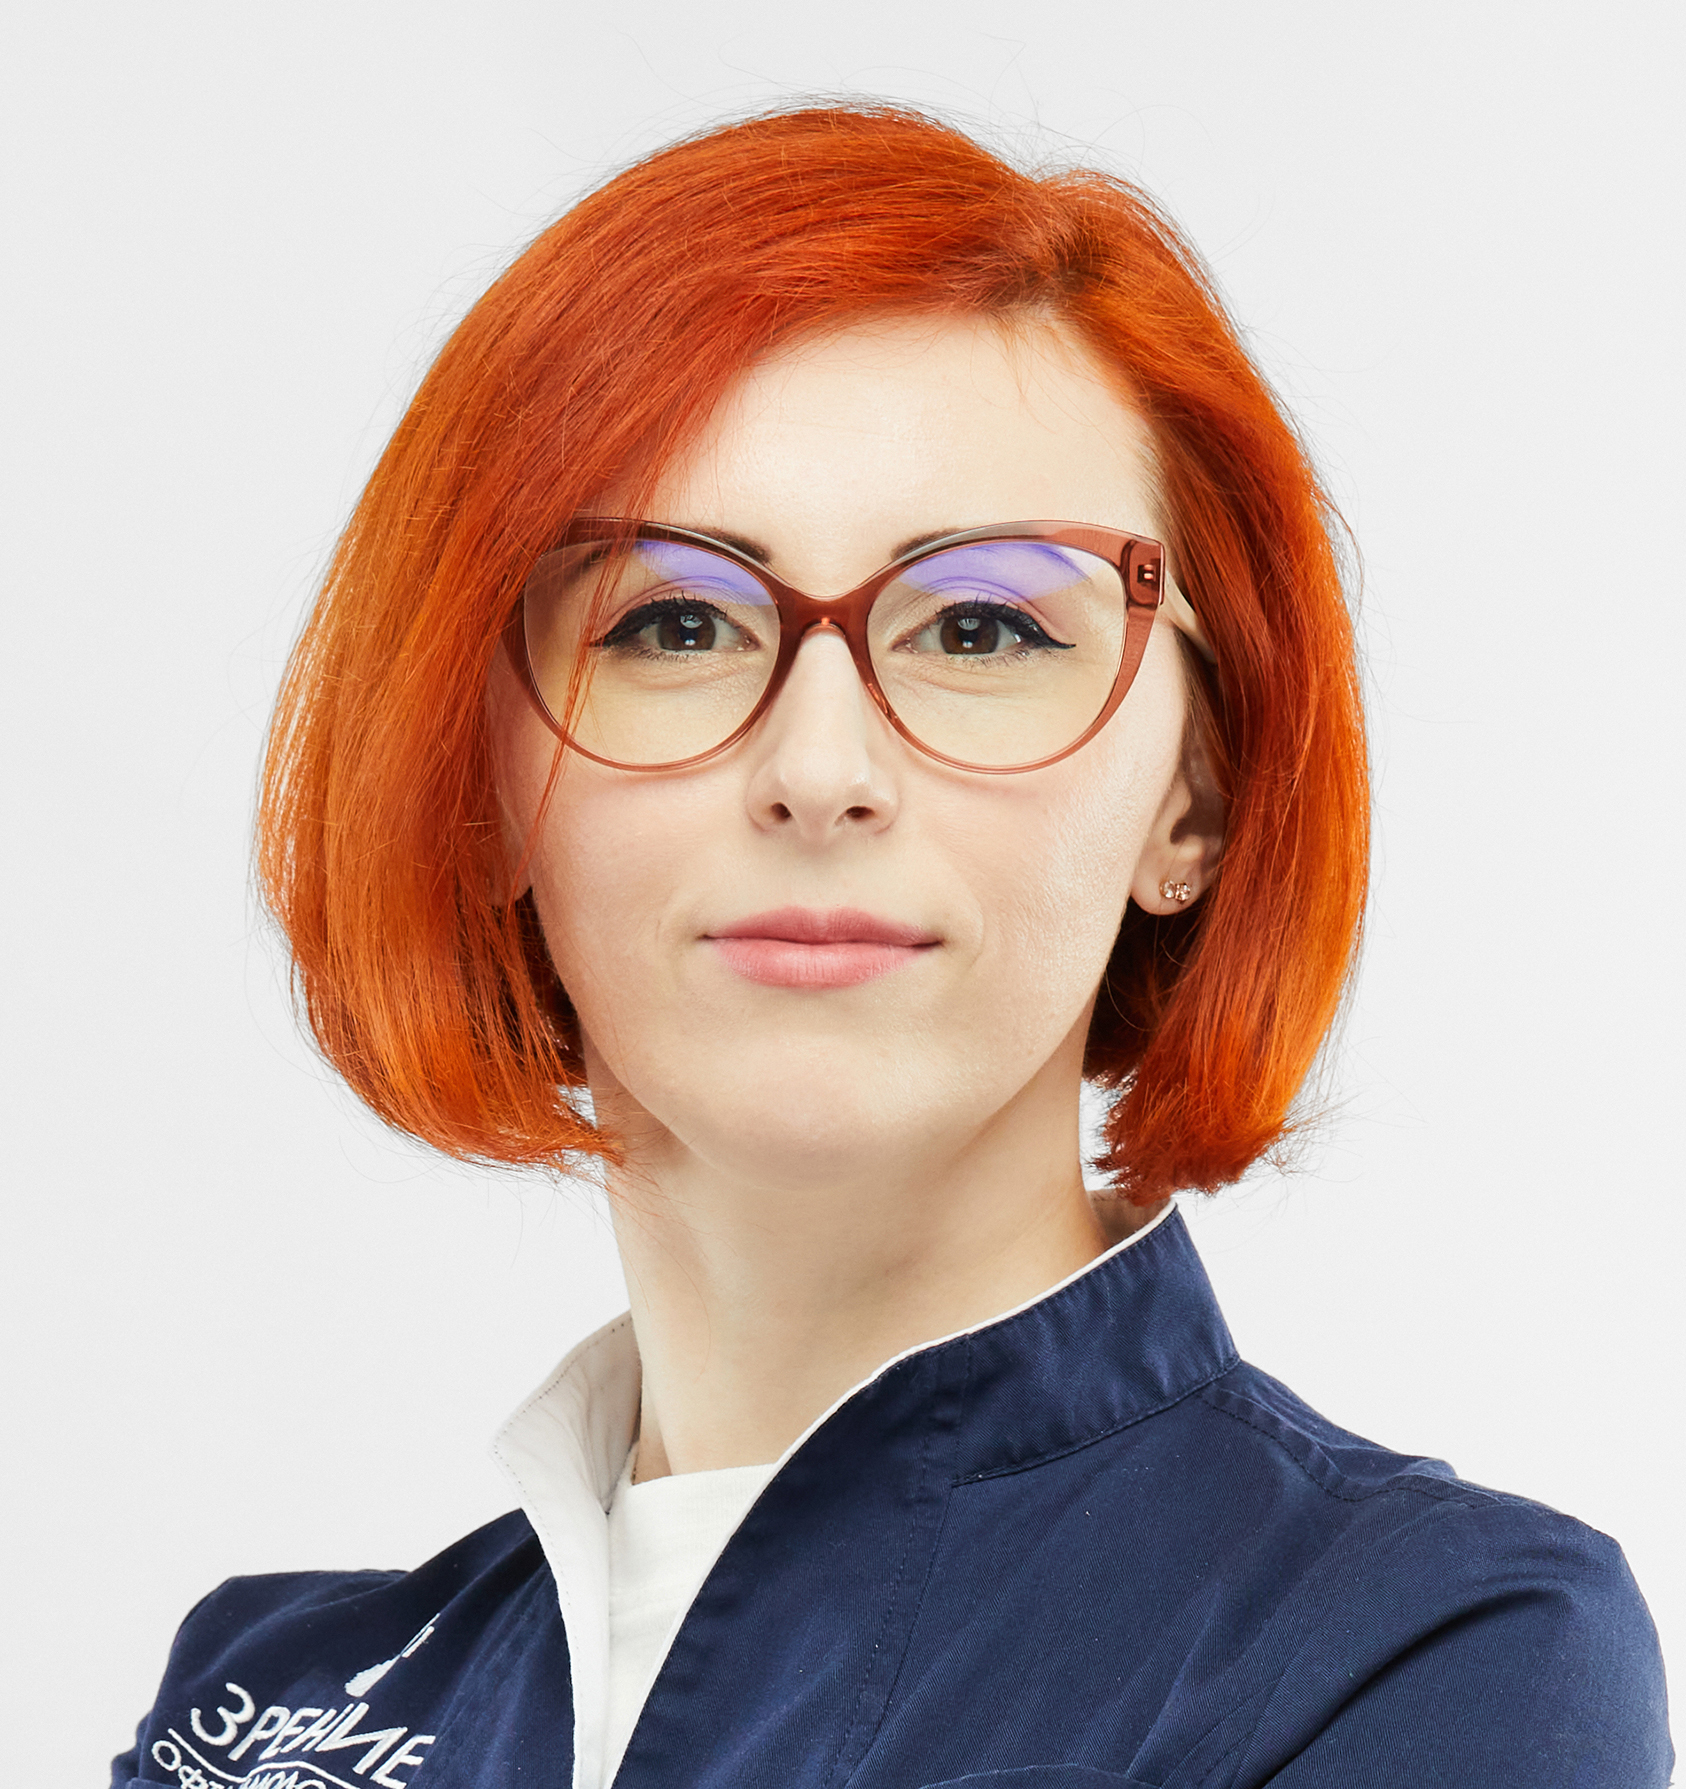 Румянцева Варвара Николаевна оптометрист офтальмологического центра Зрение спб